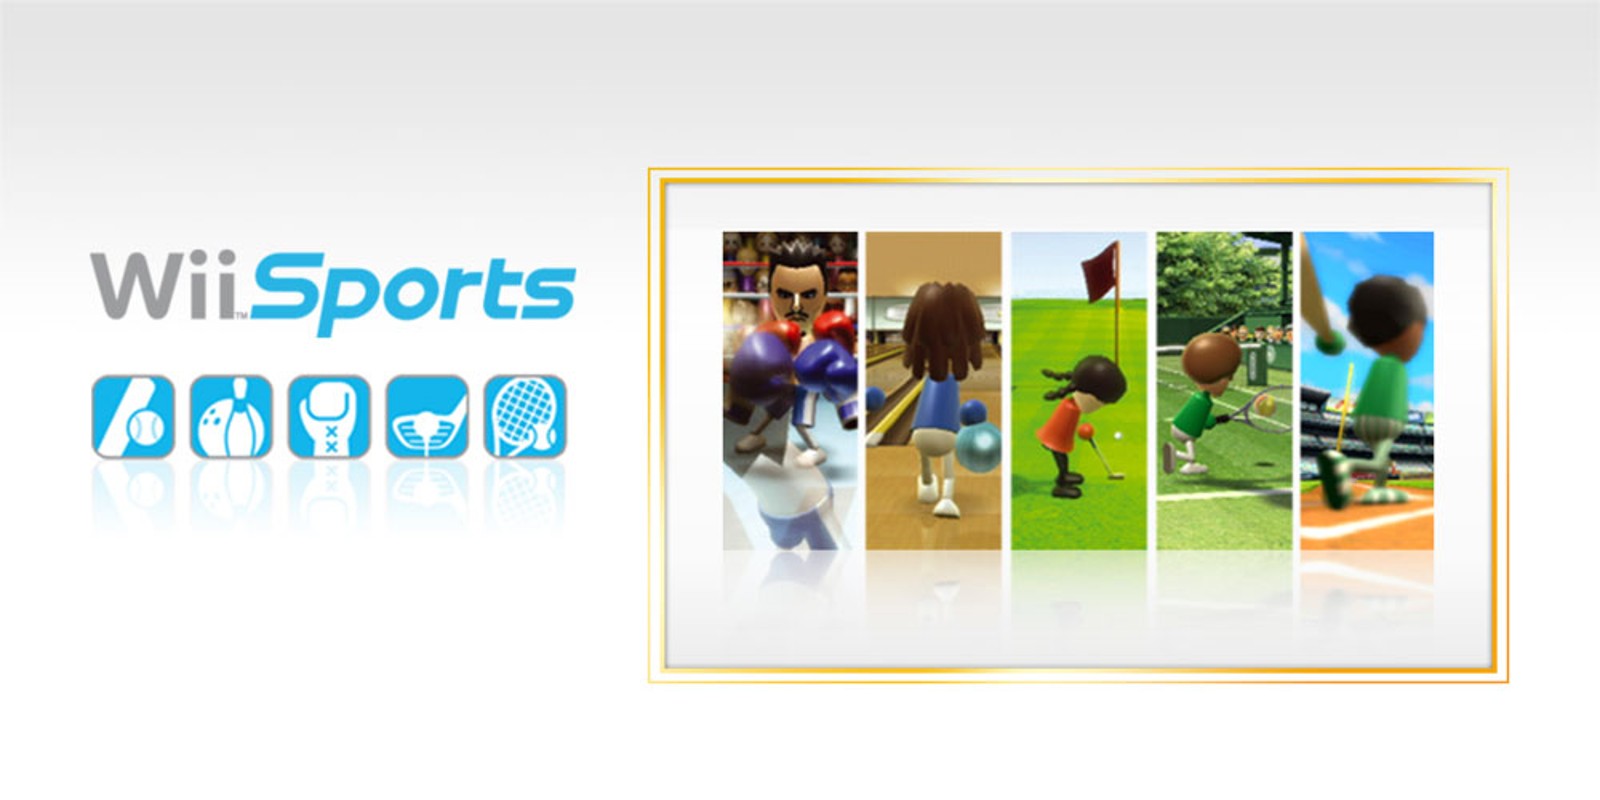 SI_Wii_WiiSports_NintendoSelects_image1600w.jpg